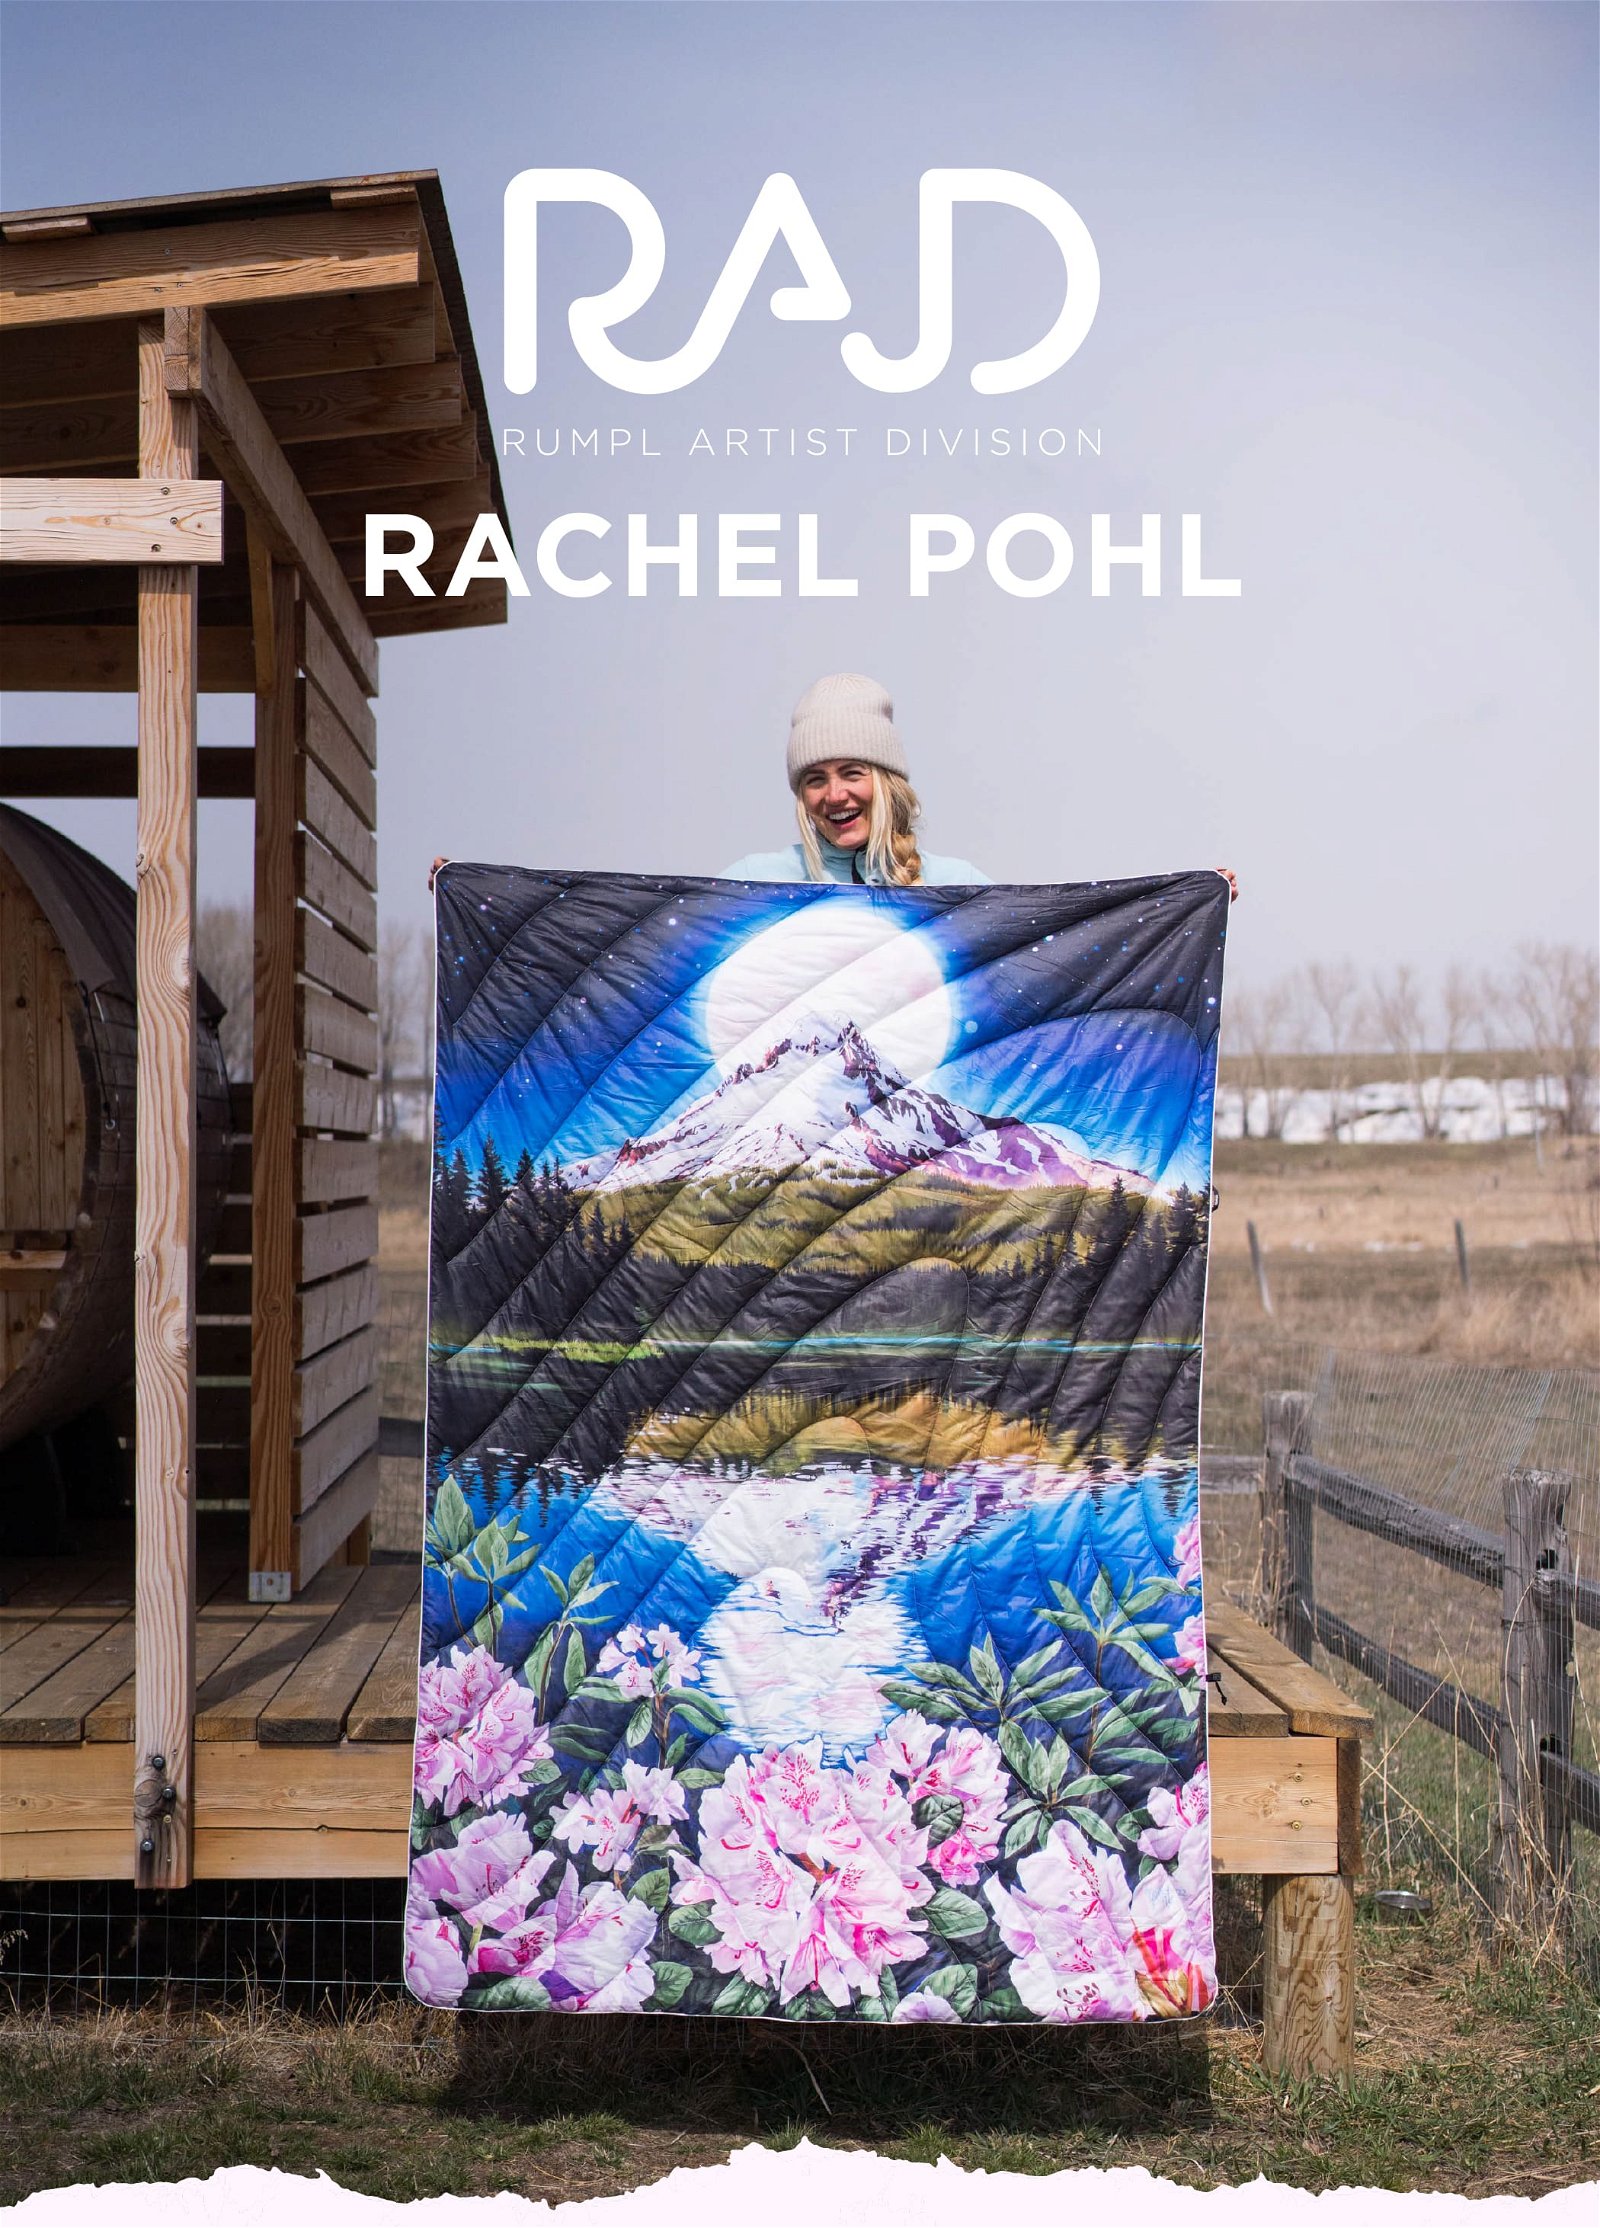 Rumpl Artist Division - Rachel Pohl